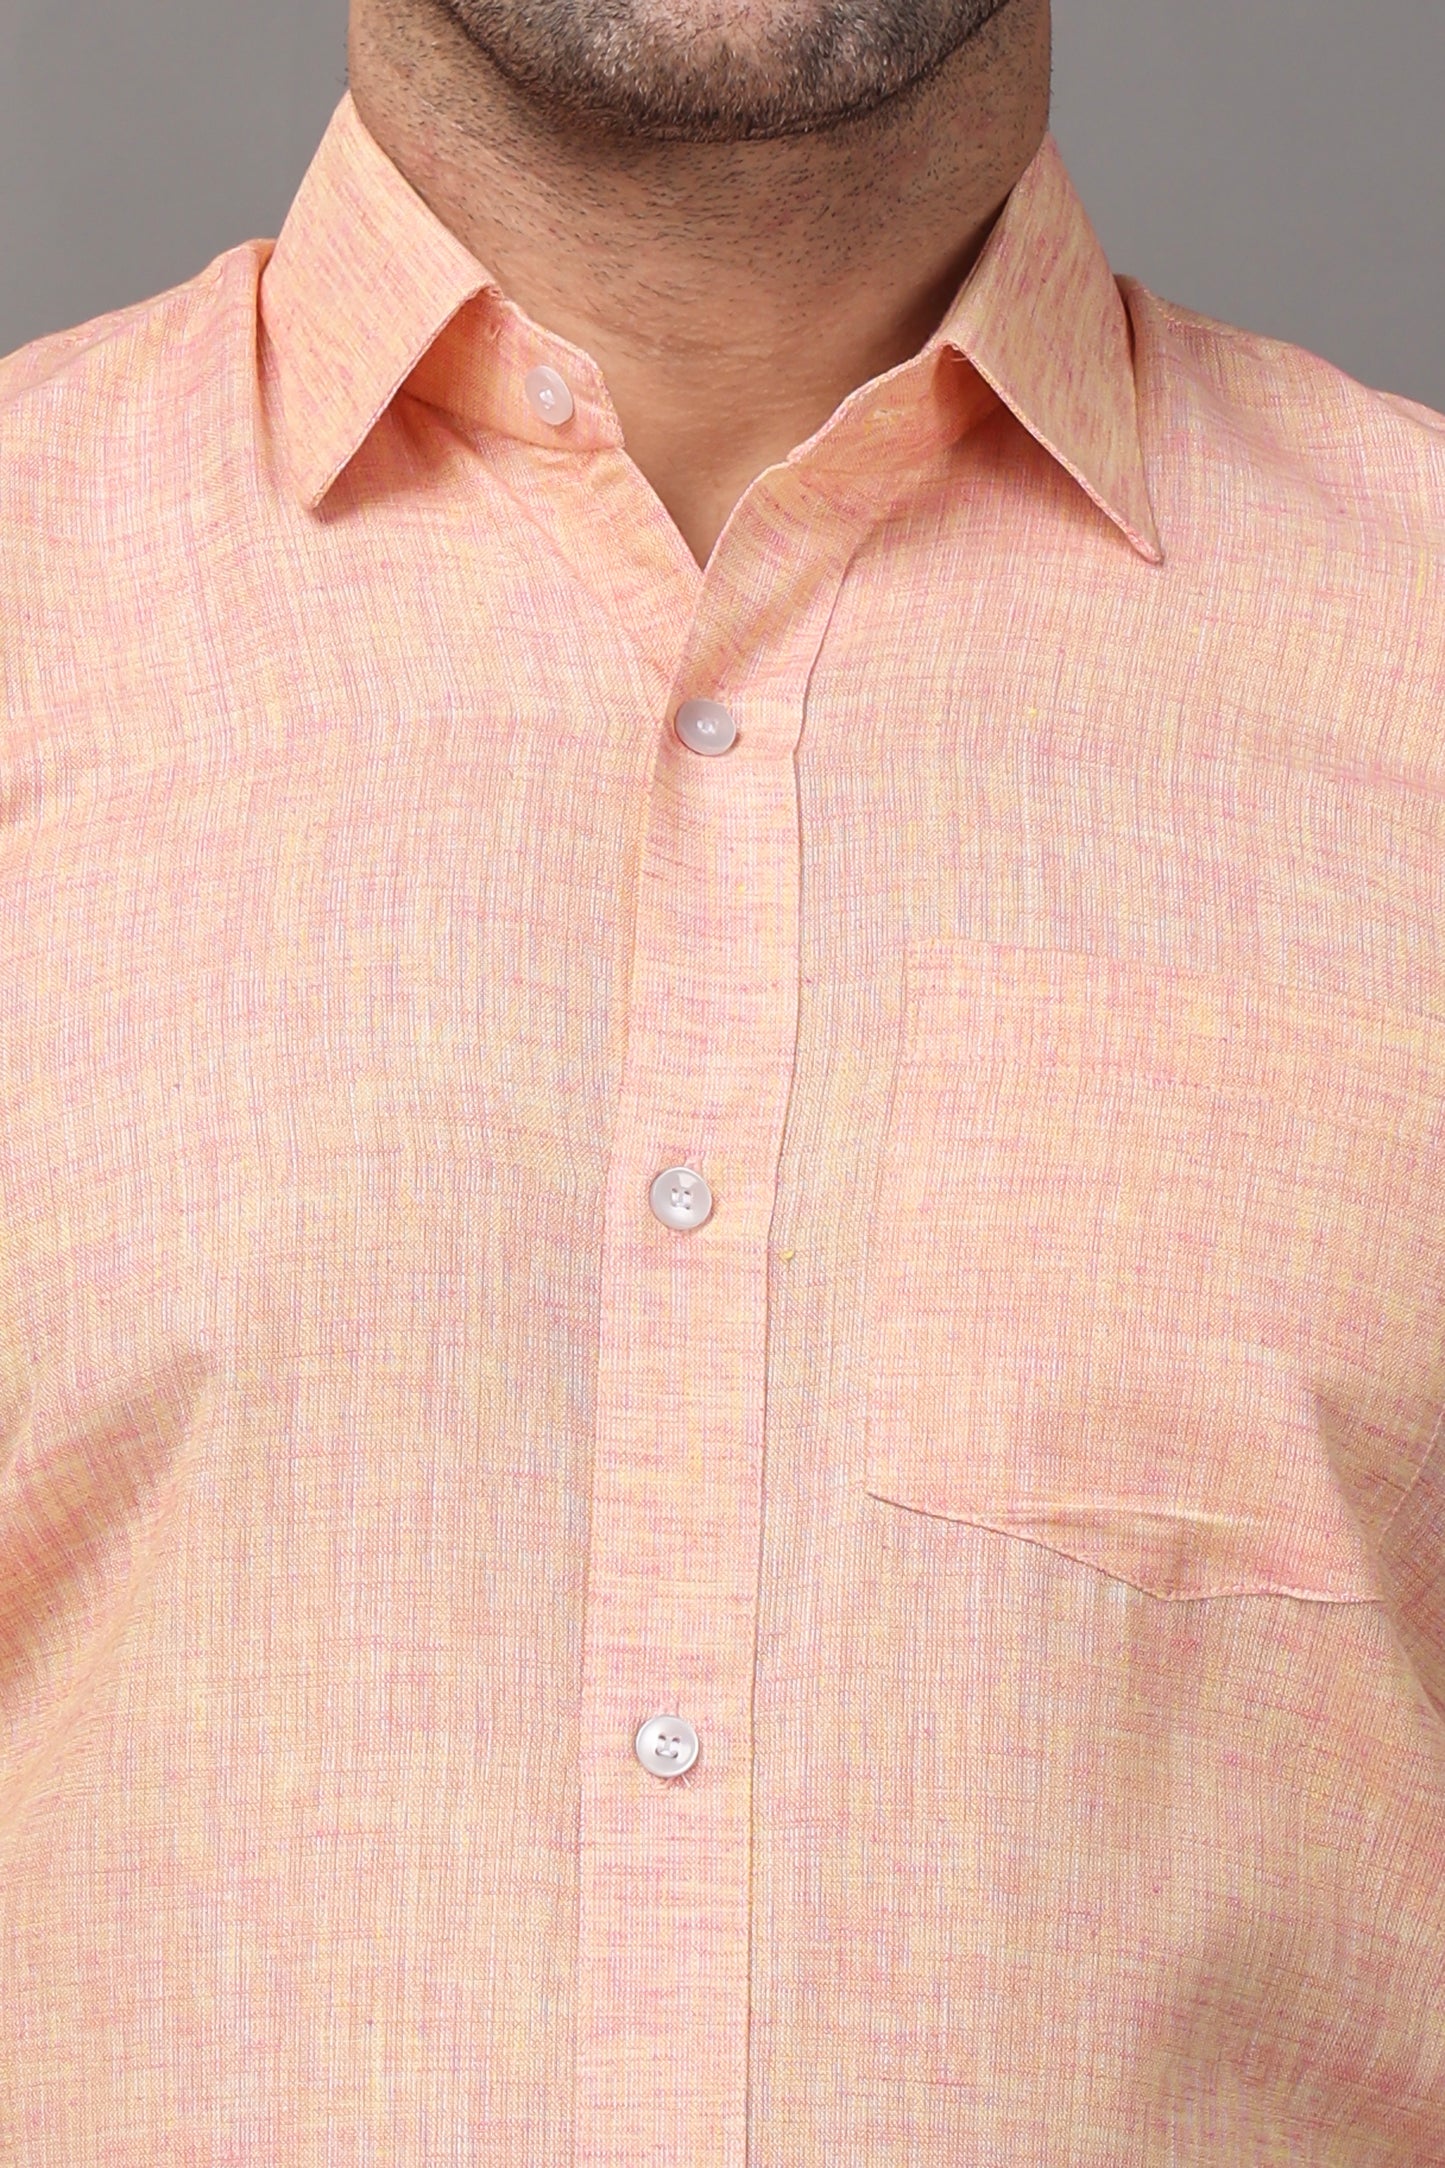 Peach Color Shirt